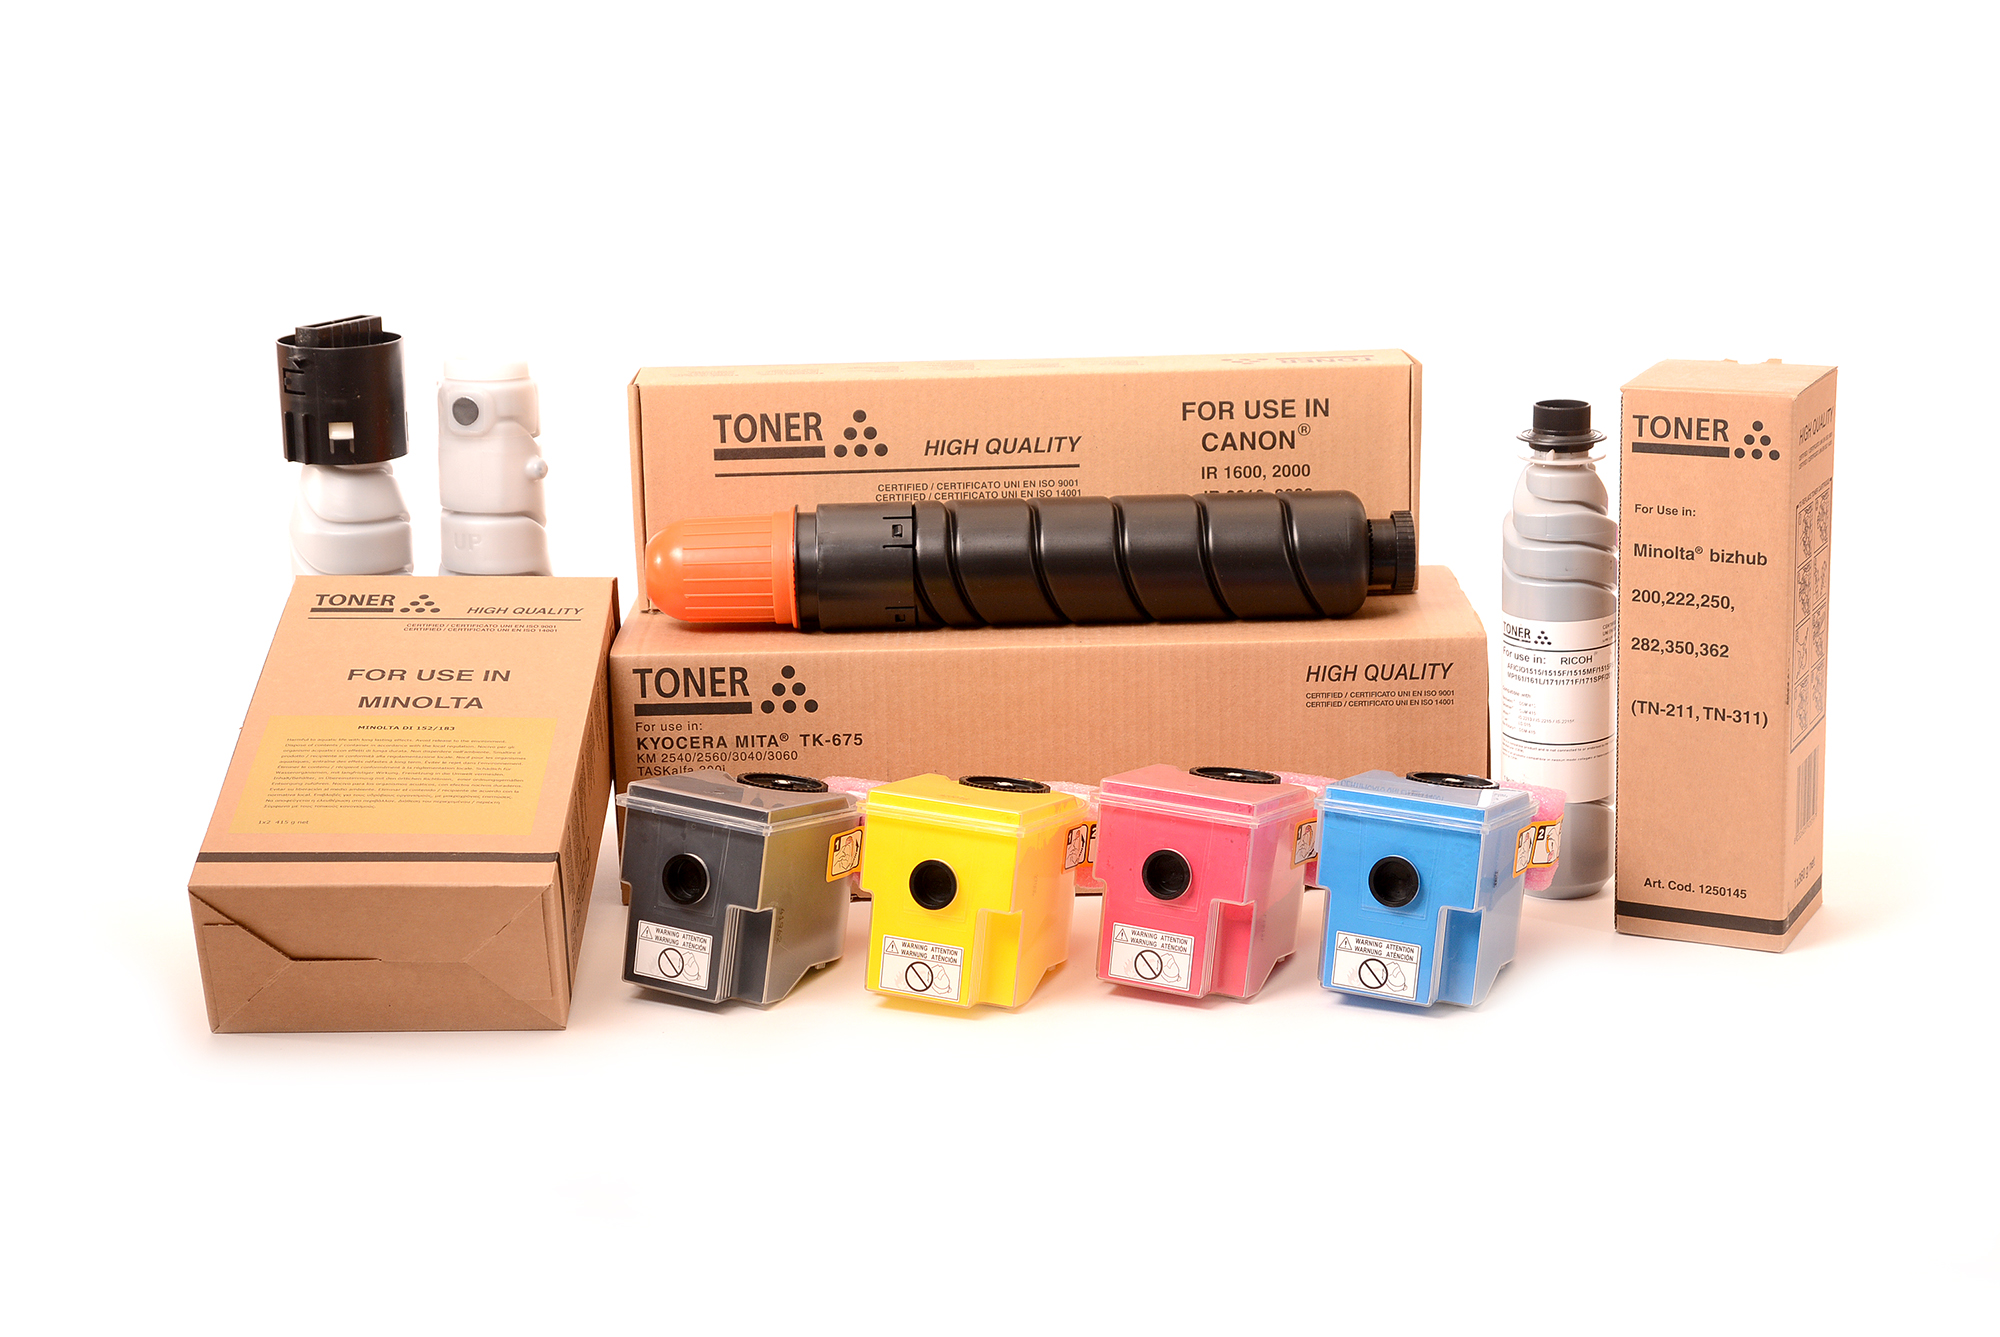 Тонер касета за принтери и печатащи устройства на Ricoh Aficio MPC2000 Type C3000E yellow. Ниски цени, прецизно изпълнение, високо качество.